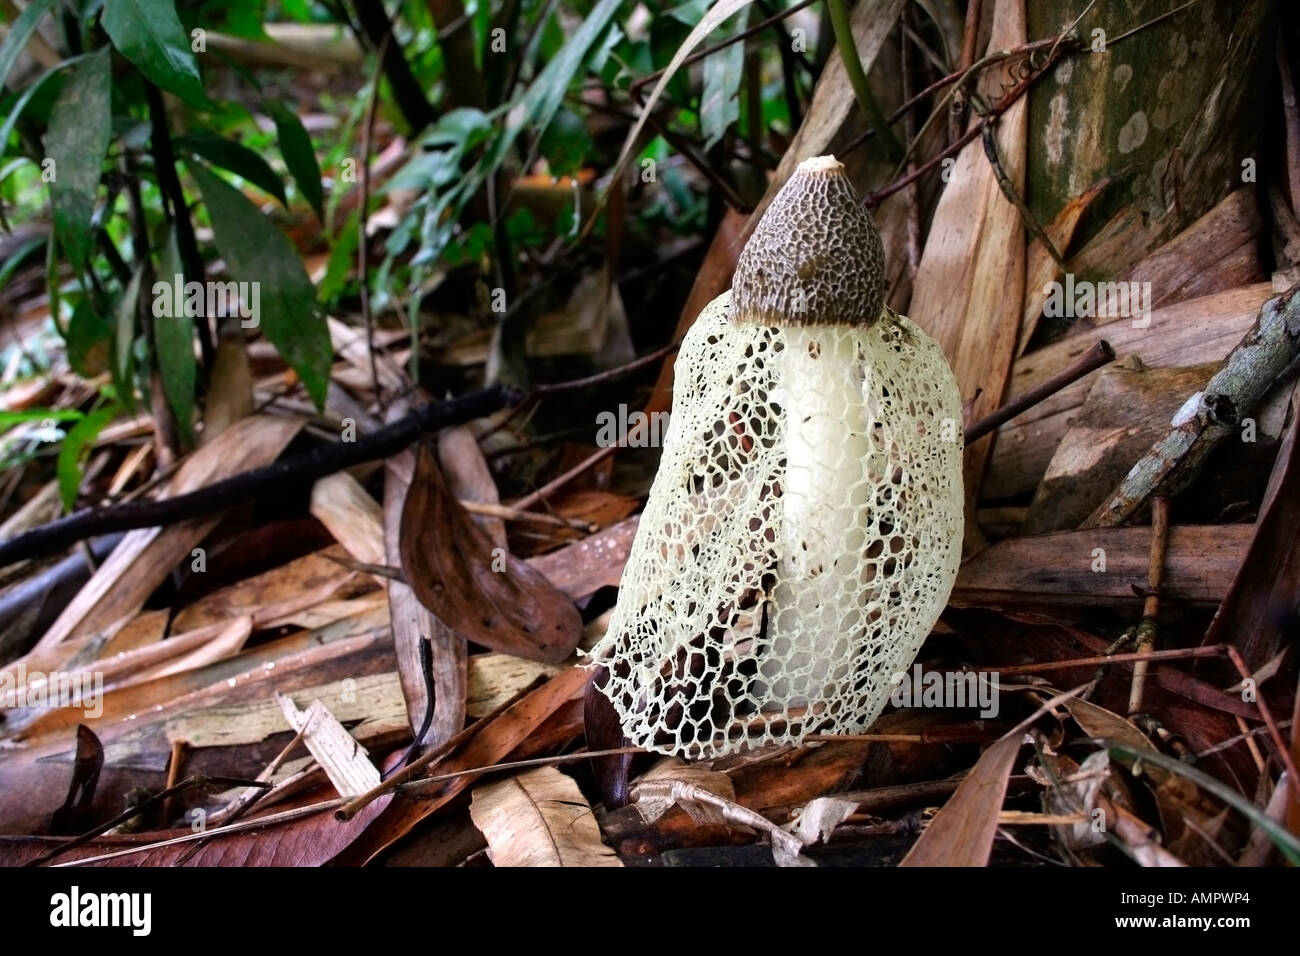 A rare tropical mushroom, basket stinkhorn (Dictyophora indusiata ),  found in Malaysia. Stock Photo